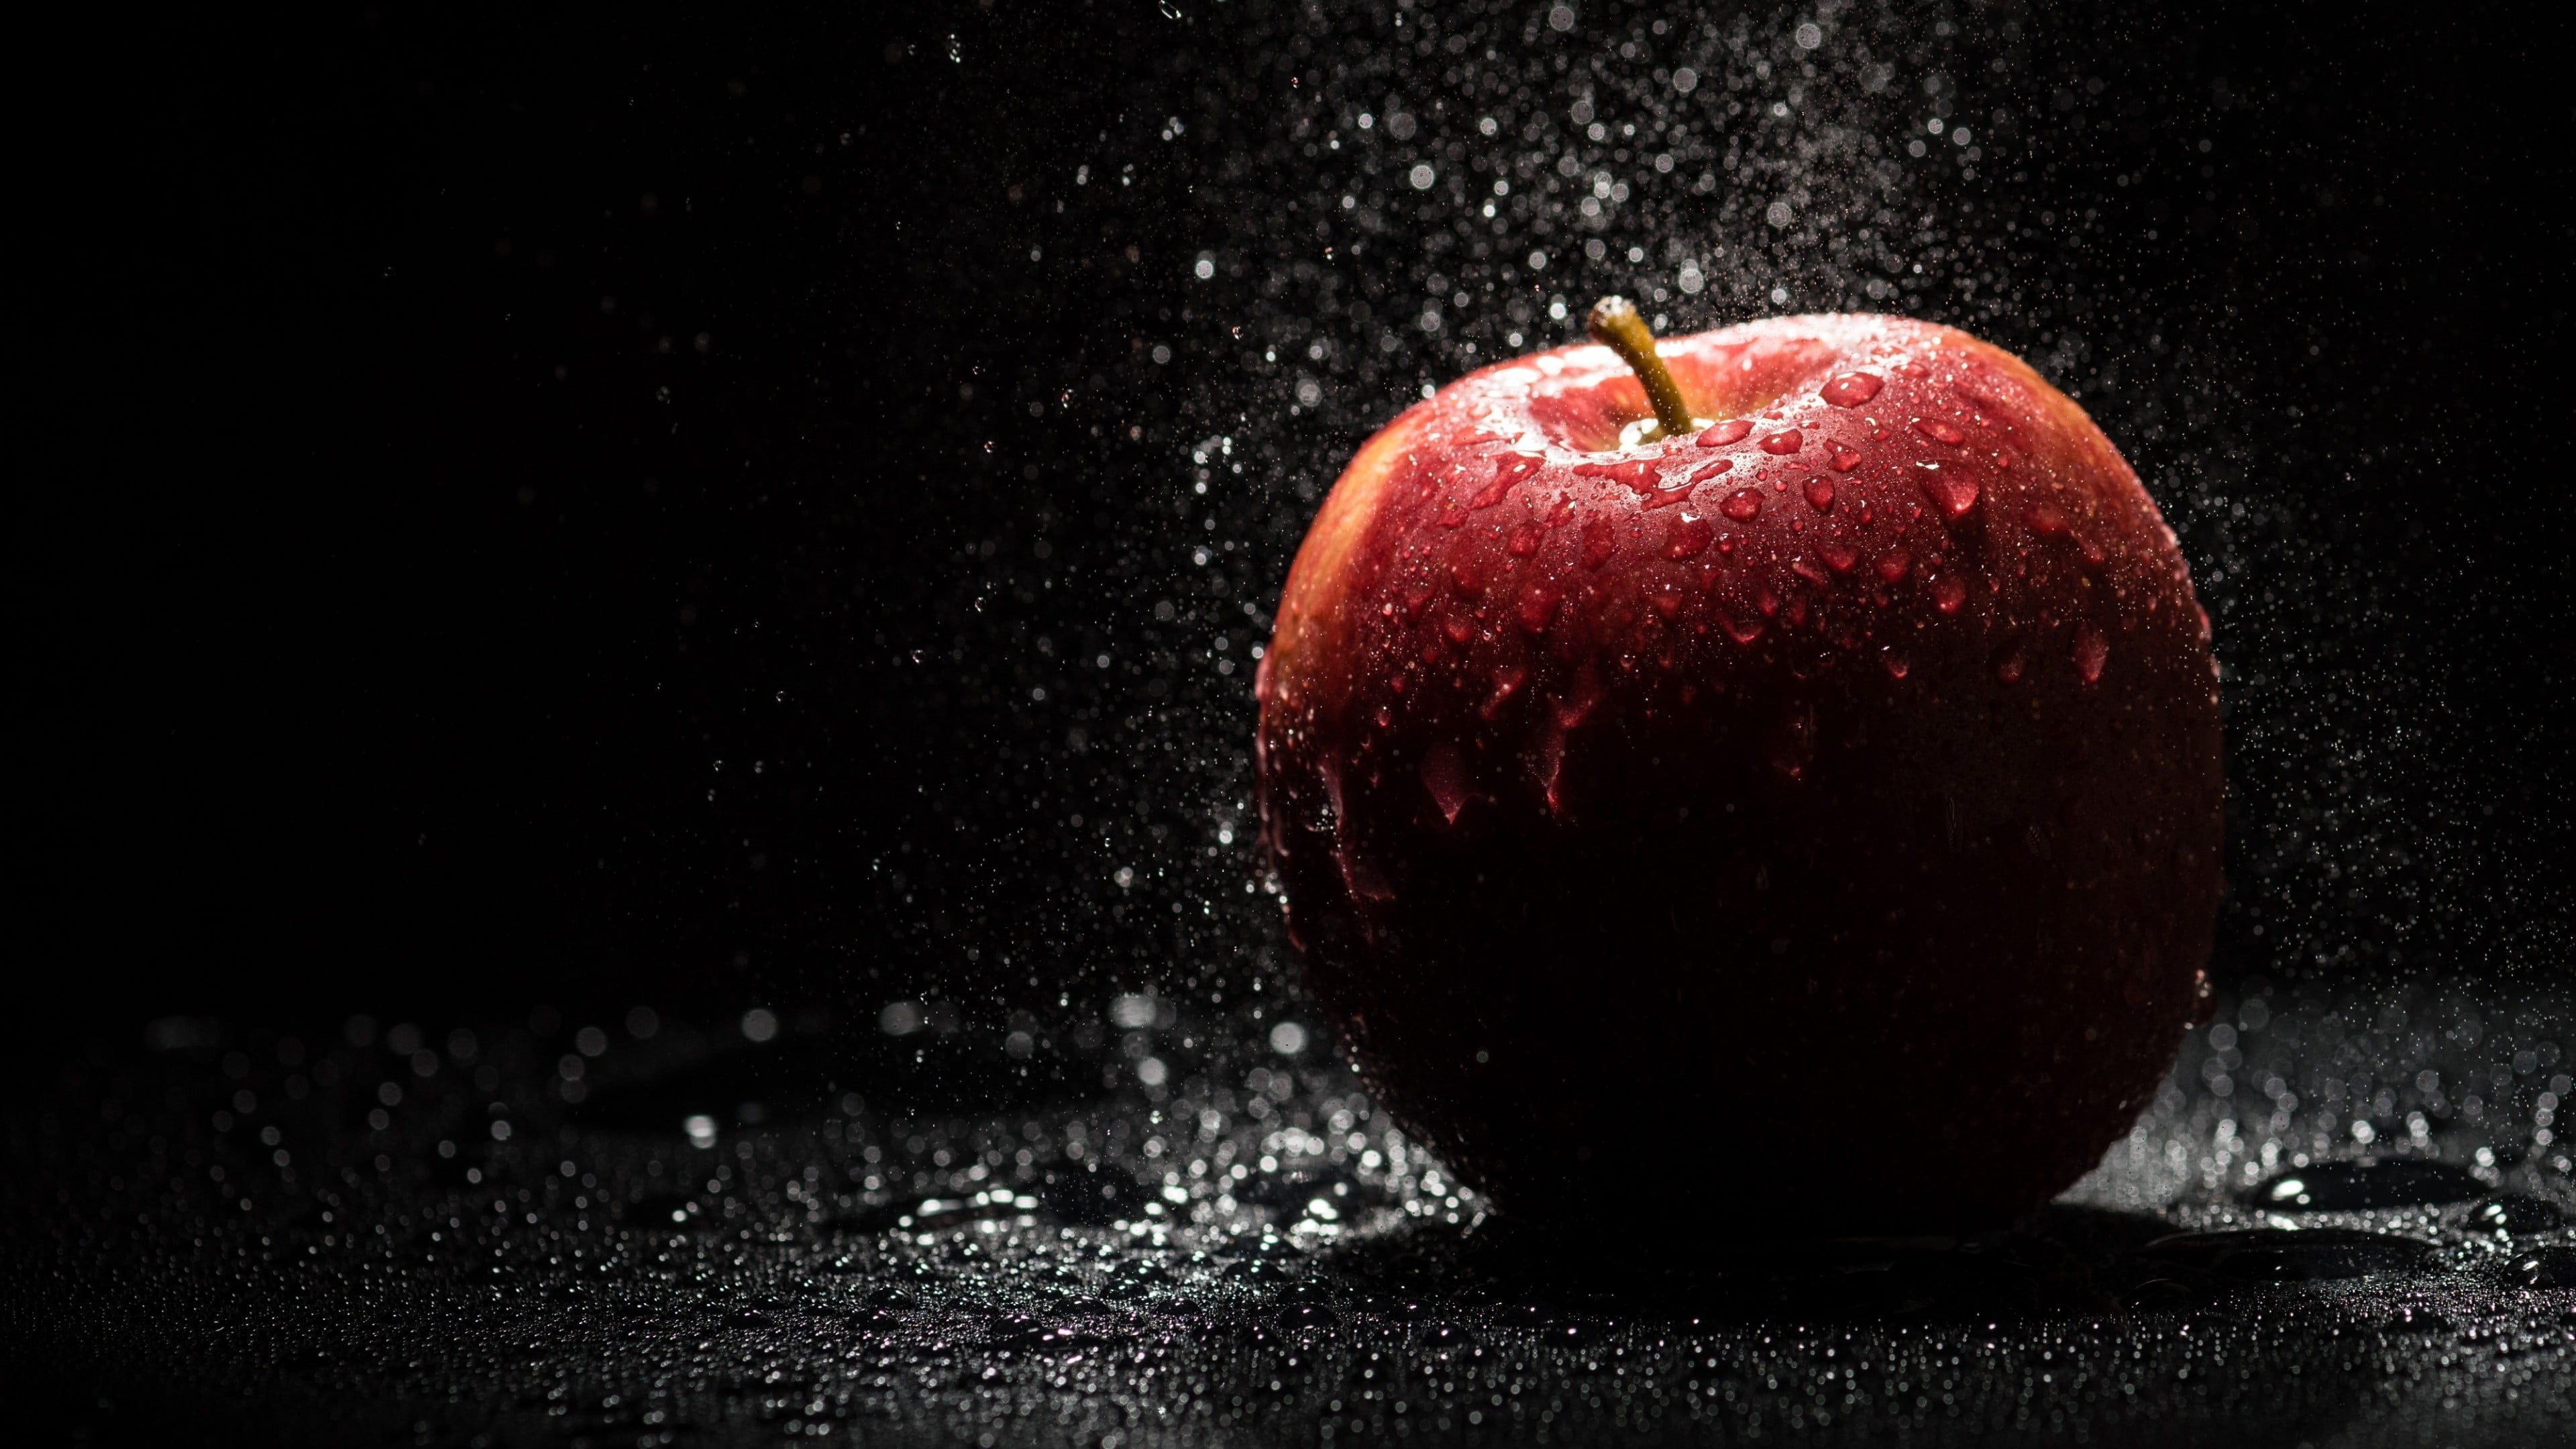 red apple #water water drops #fruit #apples #shadow #lights black